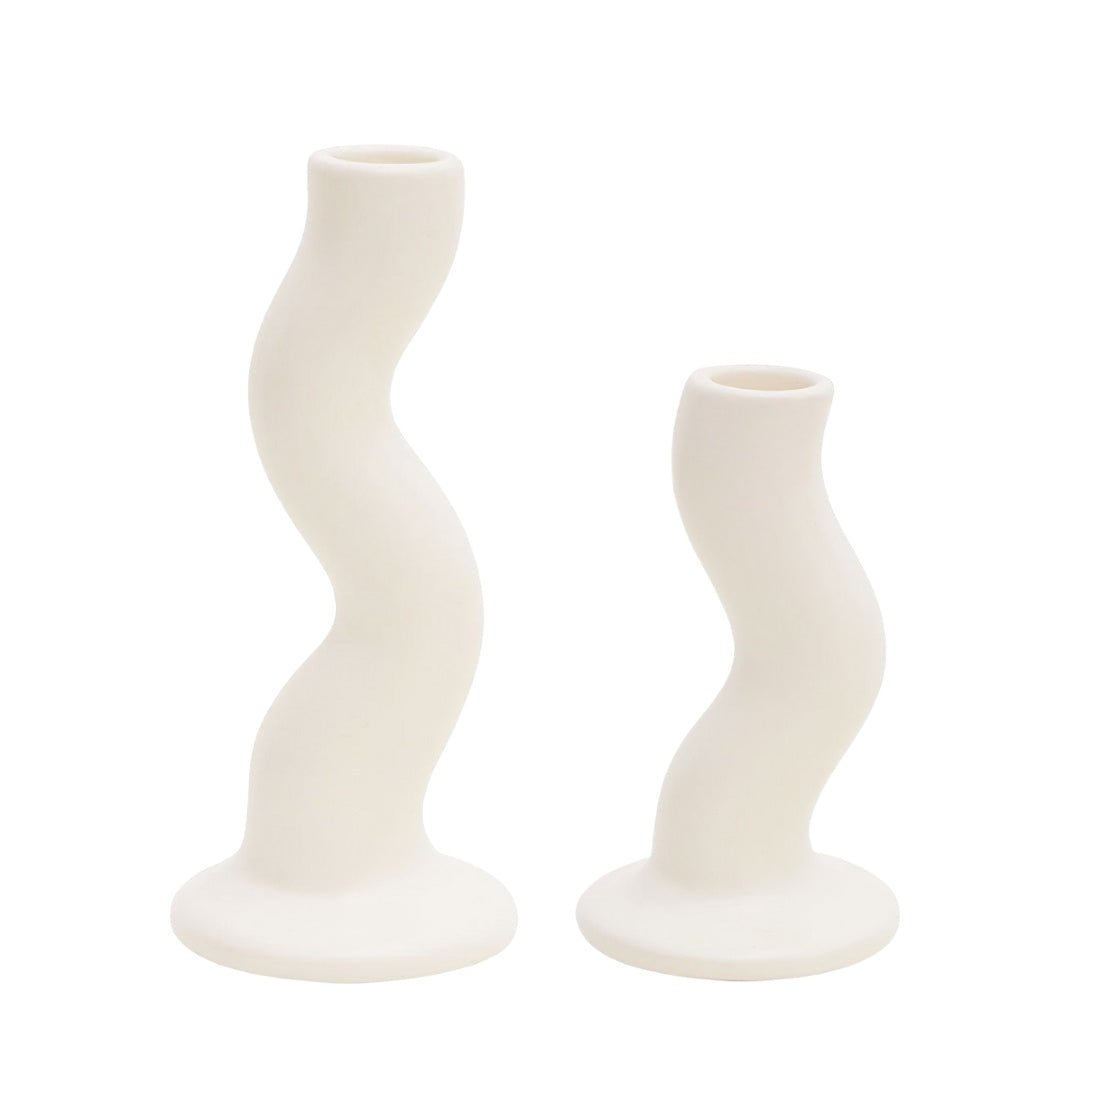 White, ceramic, wiggle candlestick holders